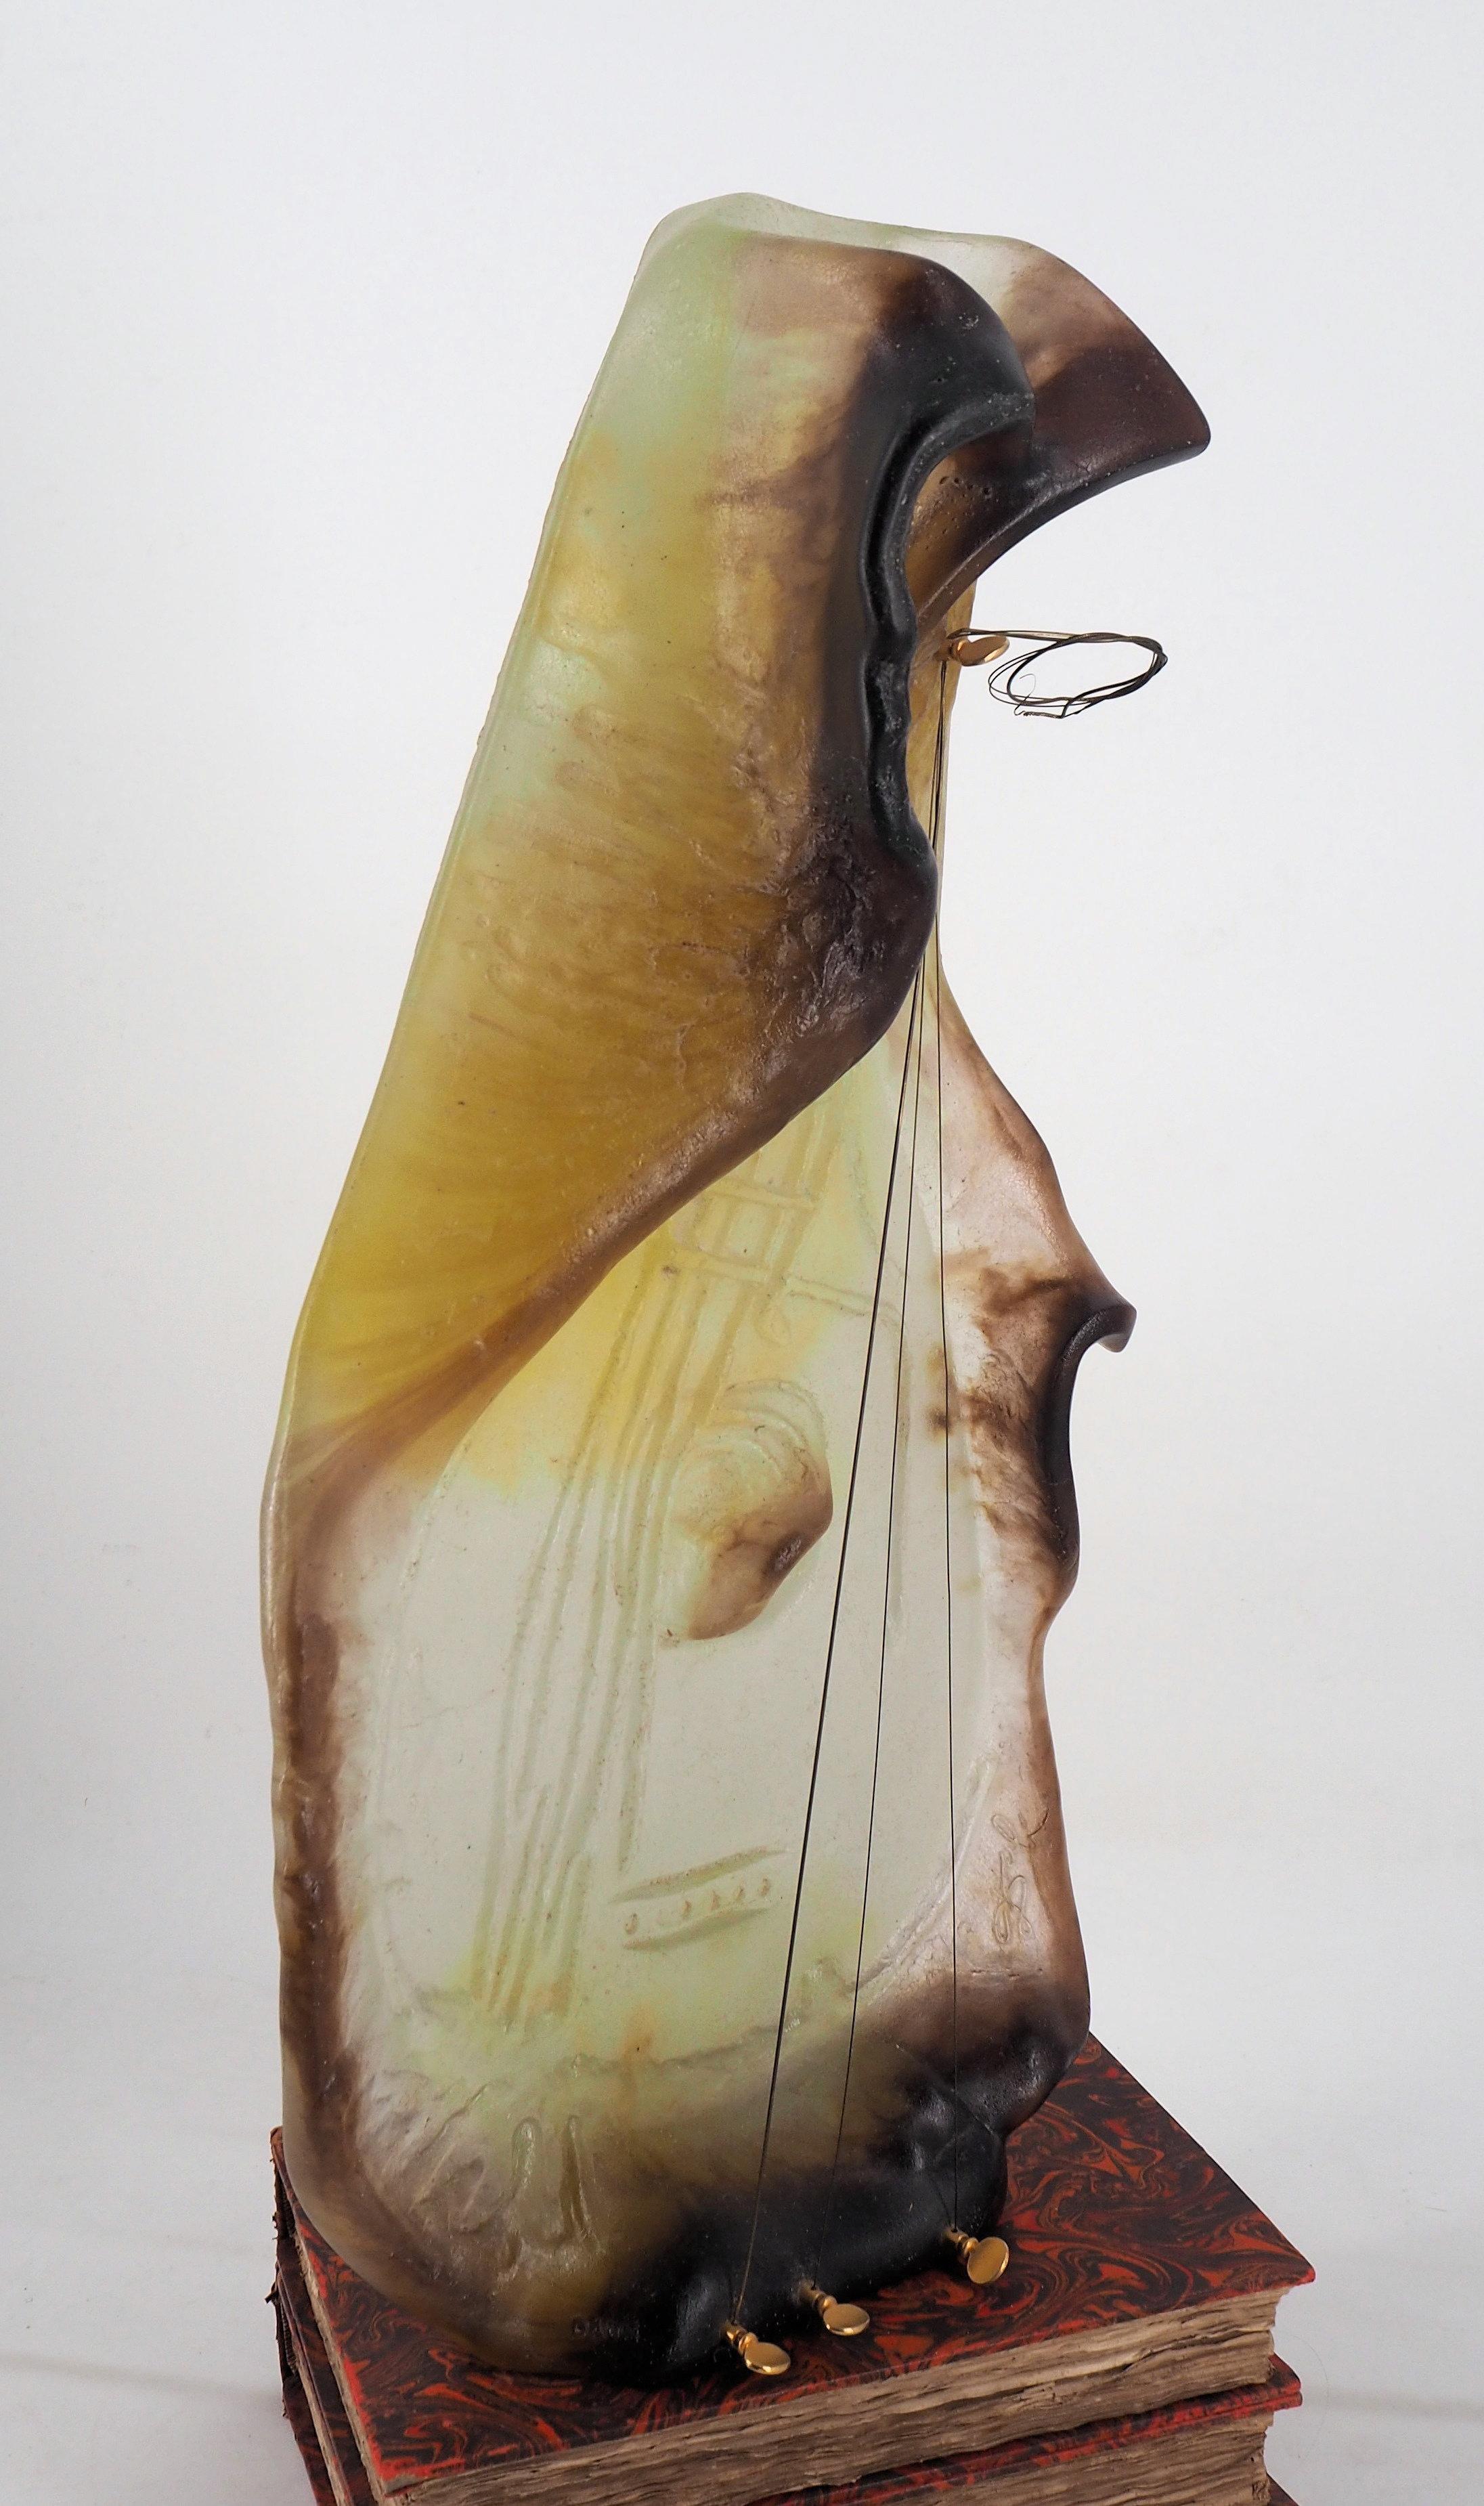 Guitar - Pate de verre sculpture, Signed - Daum 1967 (with certificate) - Surrealist Sculpture by Salvador Dalí